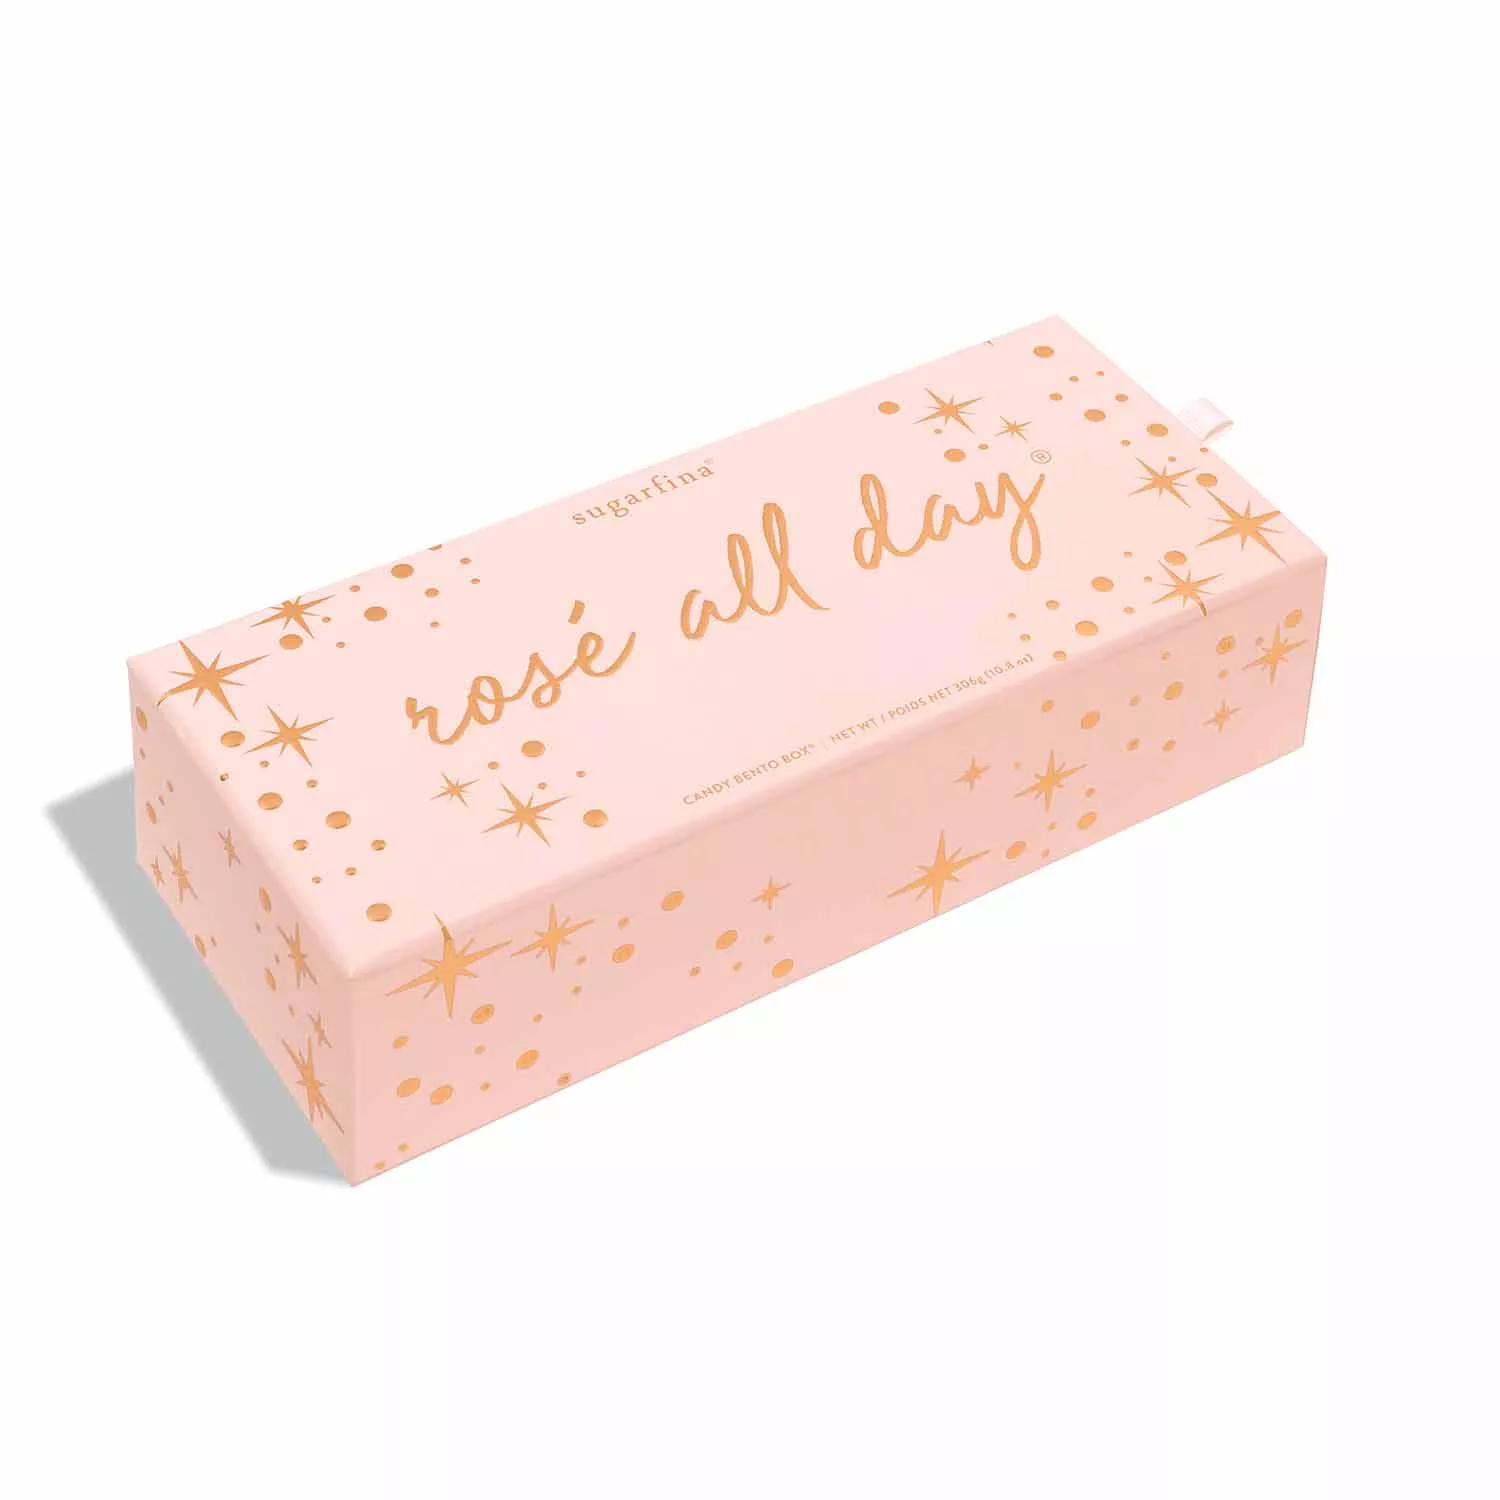 Sugarfina Ros&#233; All Day Candy Bento Box, Set of 3